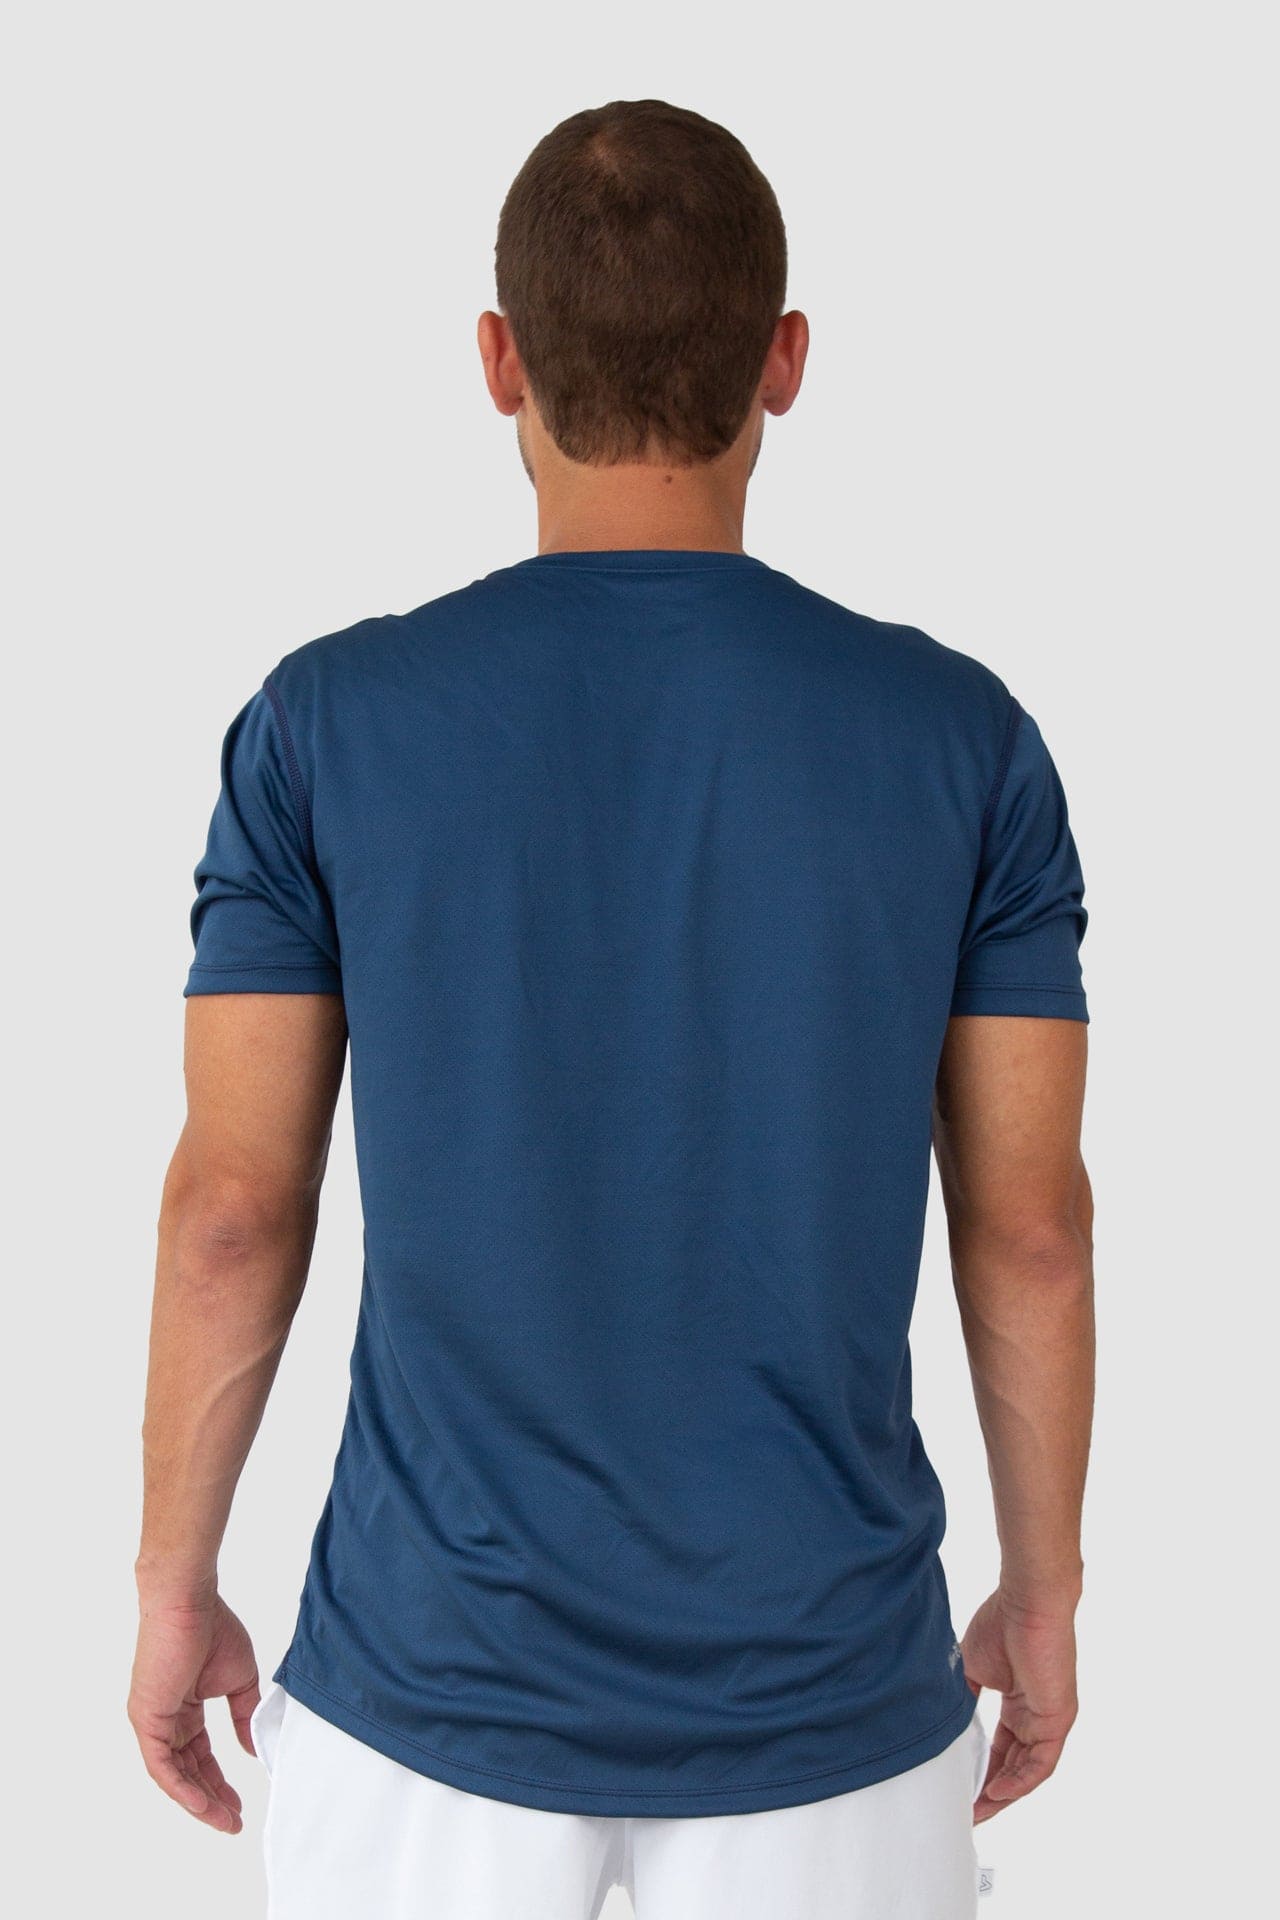 Camiseta Padel Dark Blue